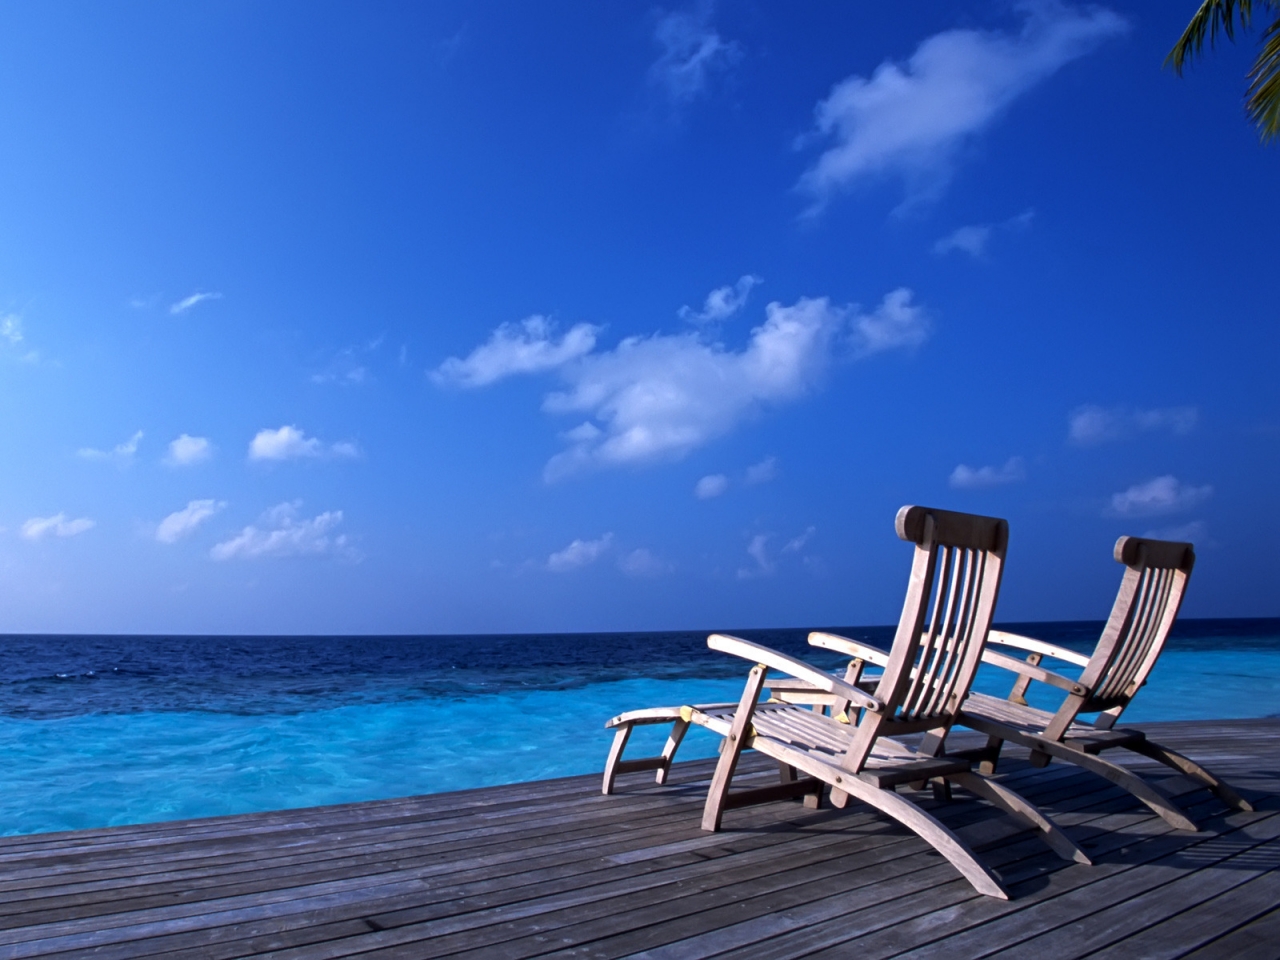 Maldives Beach for 1280 x 960 resolution